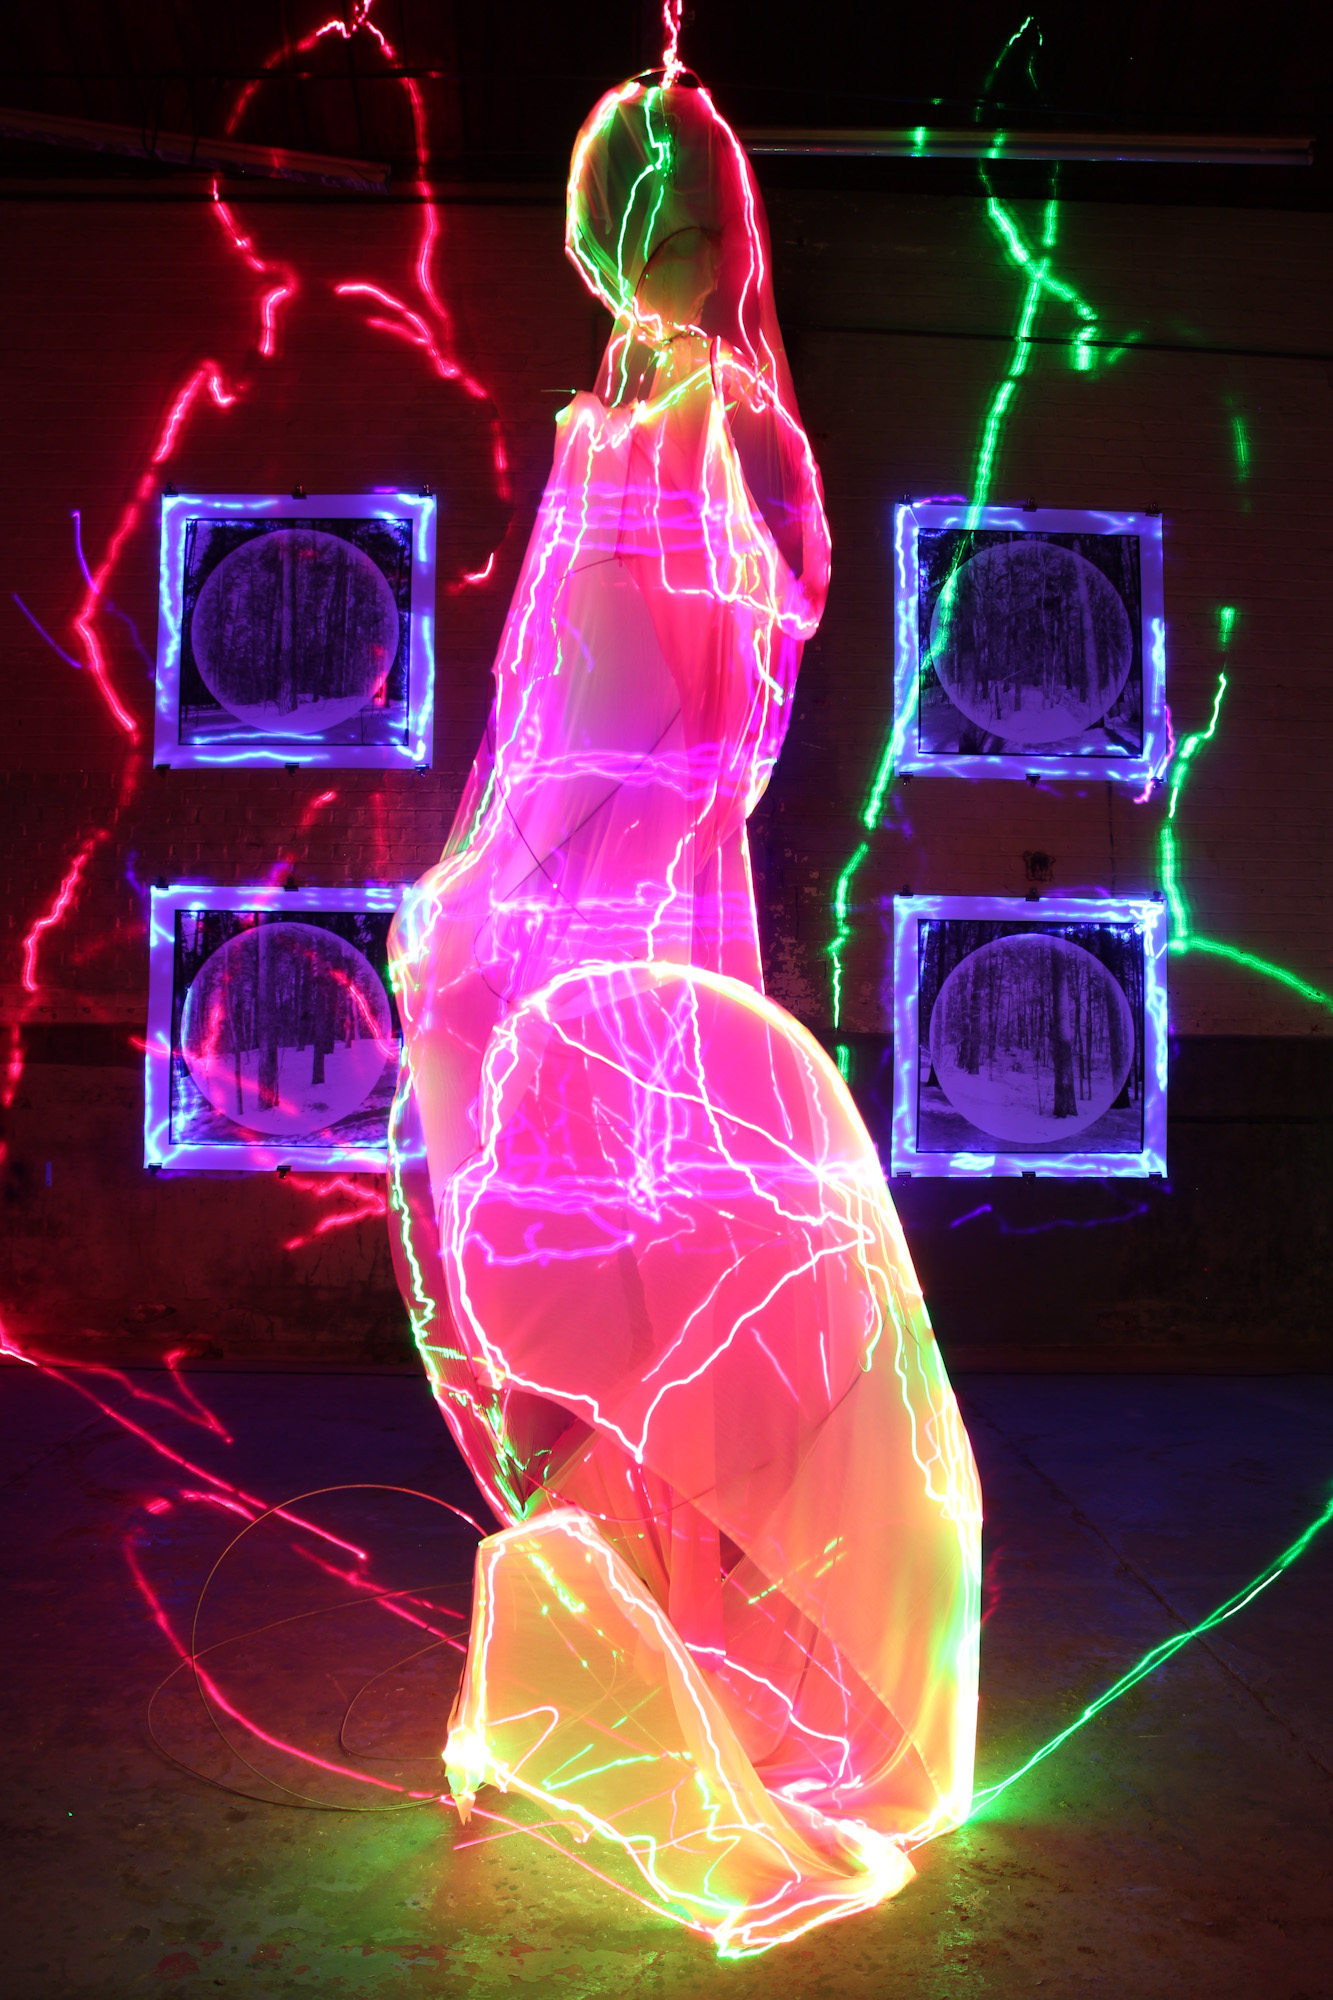 Laser illuminated sculptures